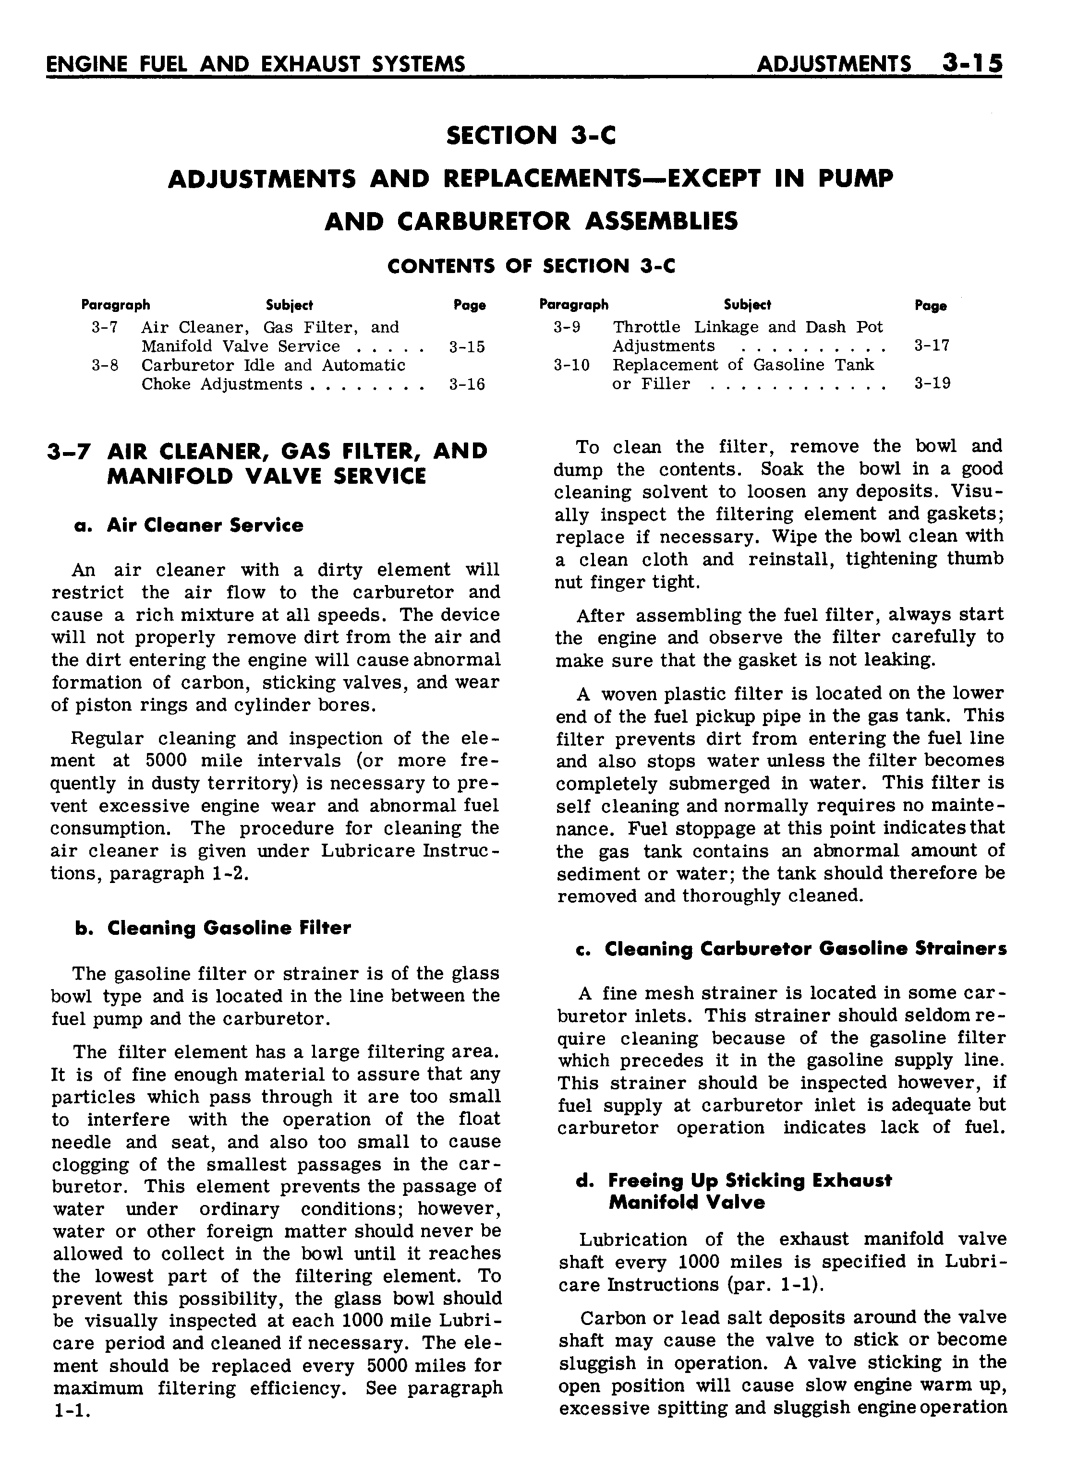 n_04 1961 Buick Shop Manual - Engine Fuel & Exhaust-015-015.jpg